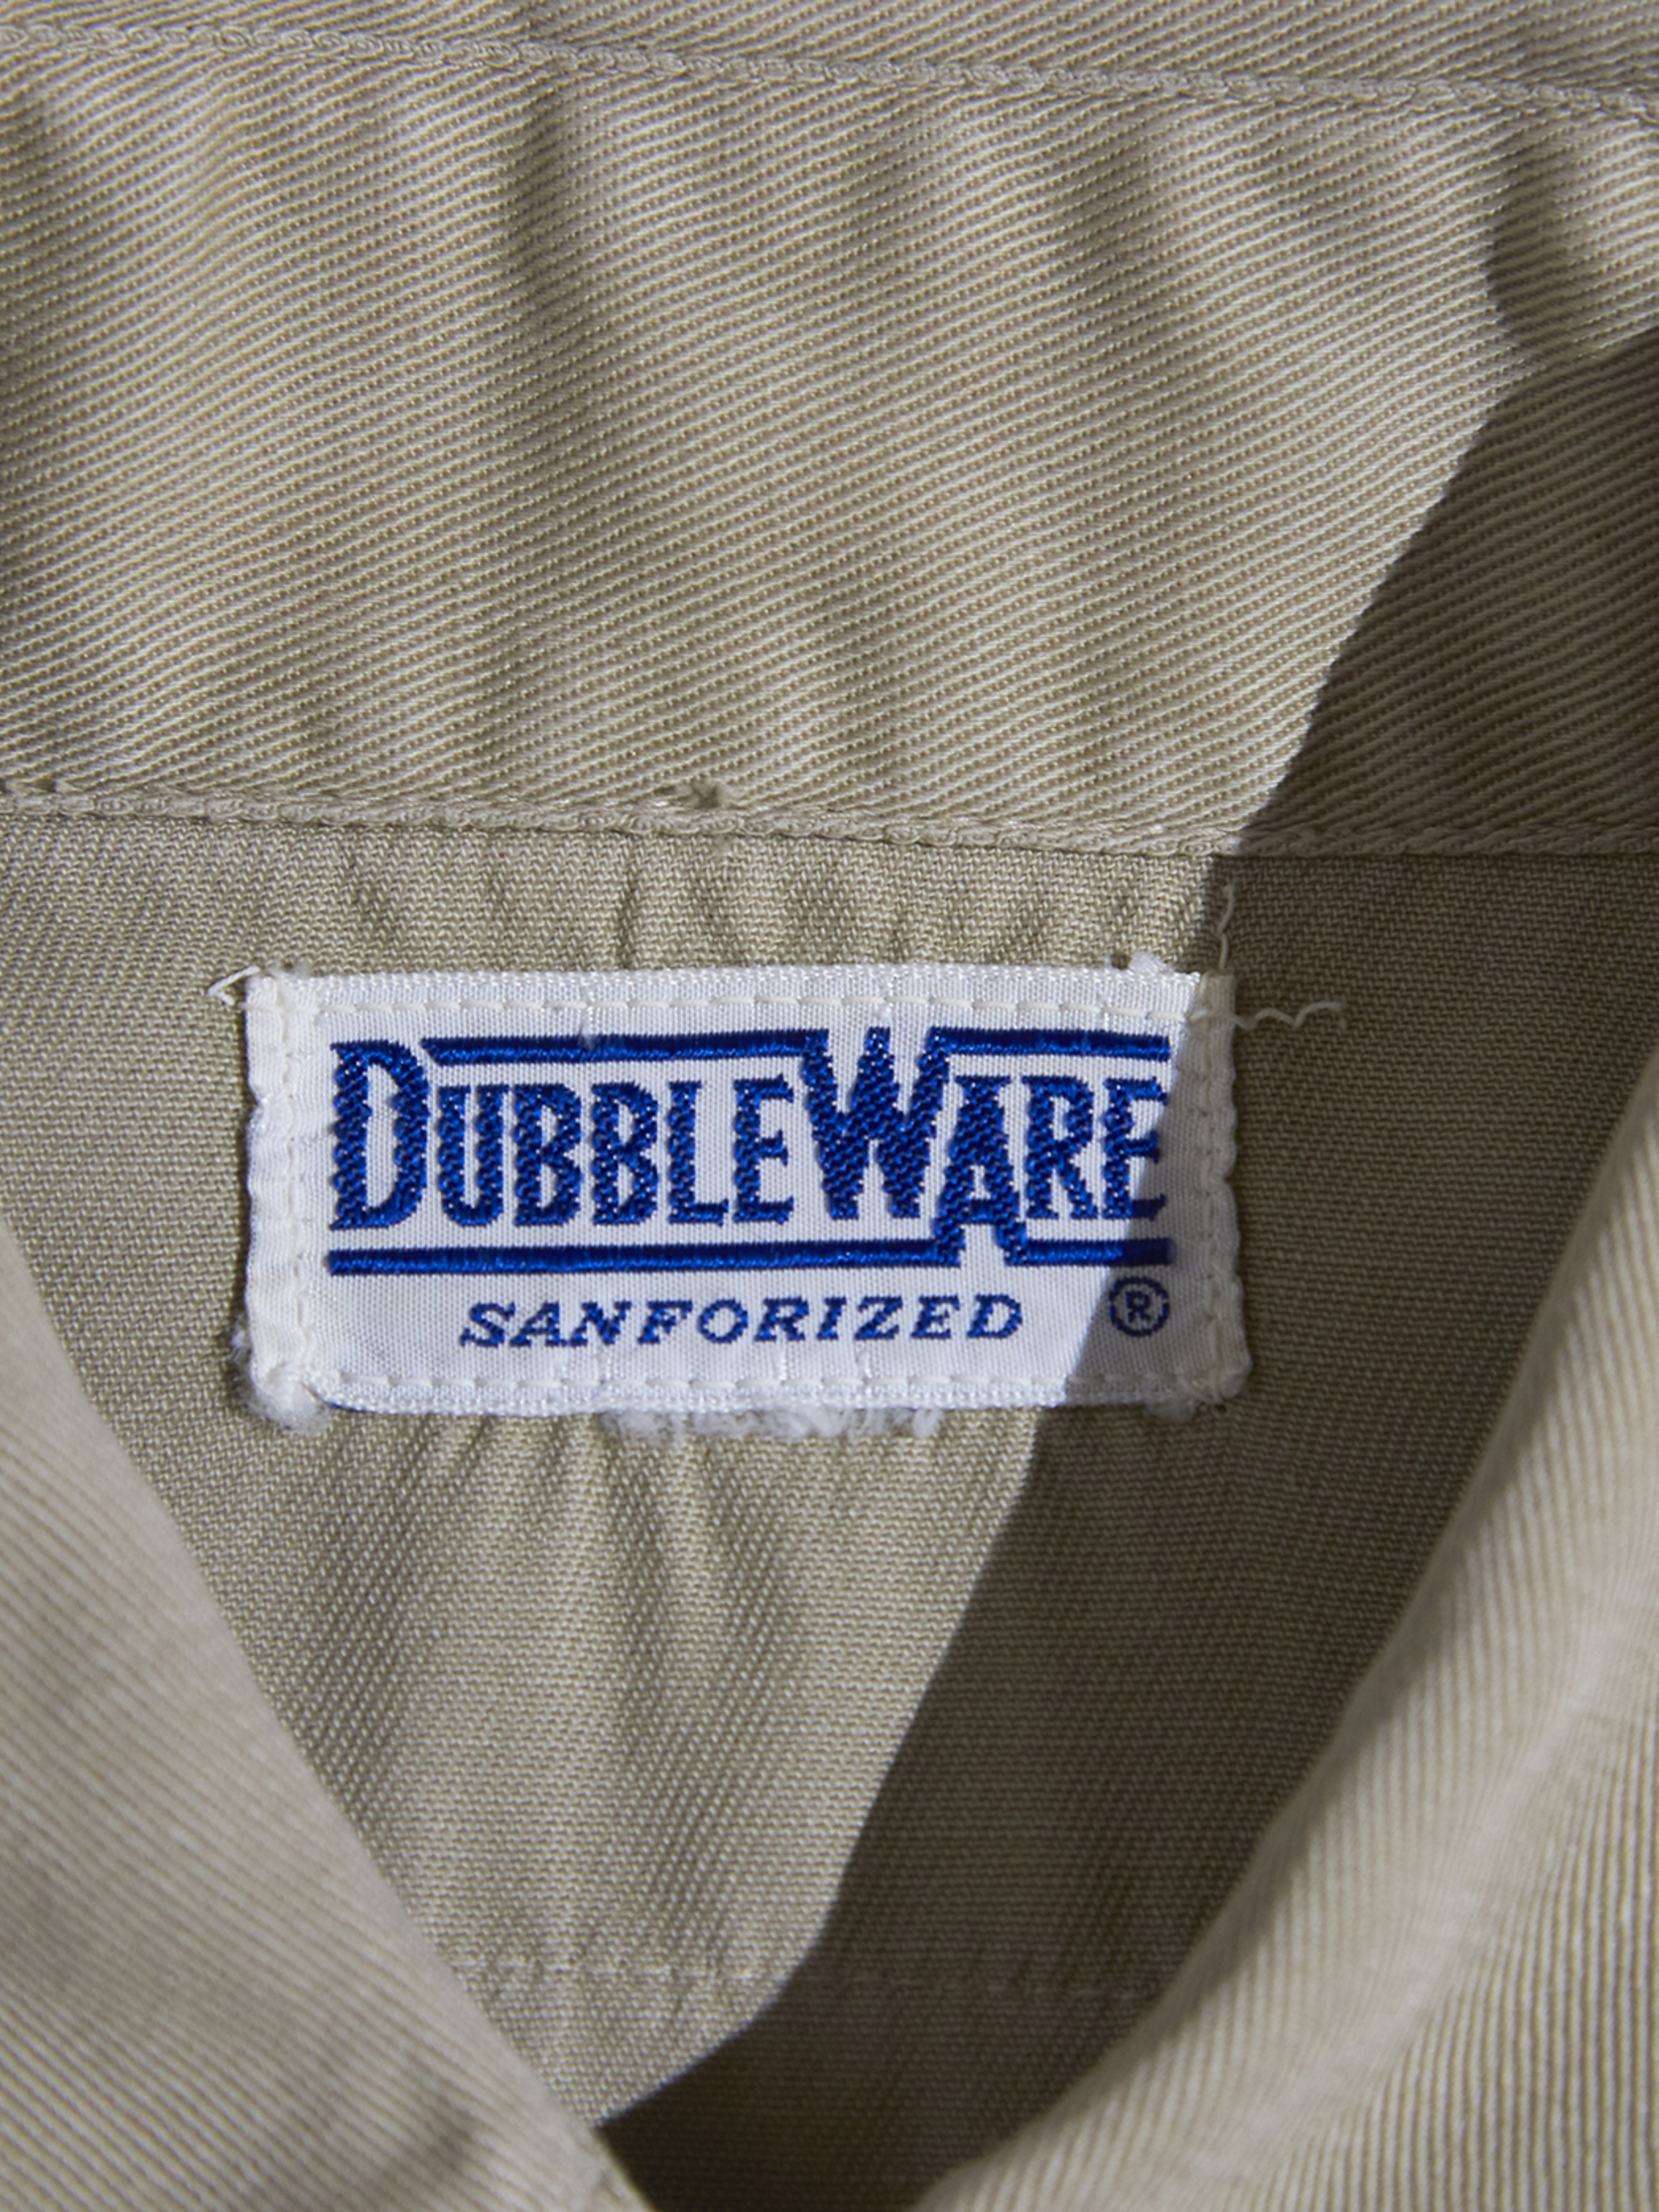 1960s "DUBBLE WARE" cotton twill work shirt -KHAKI-